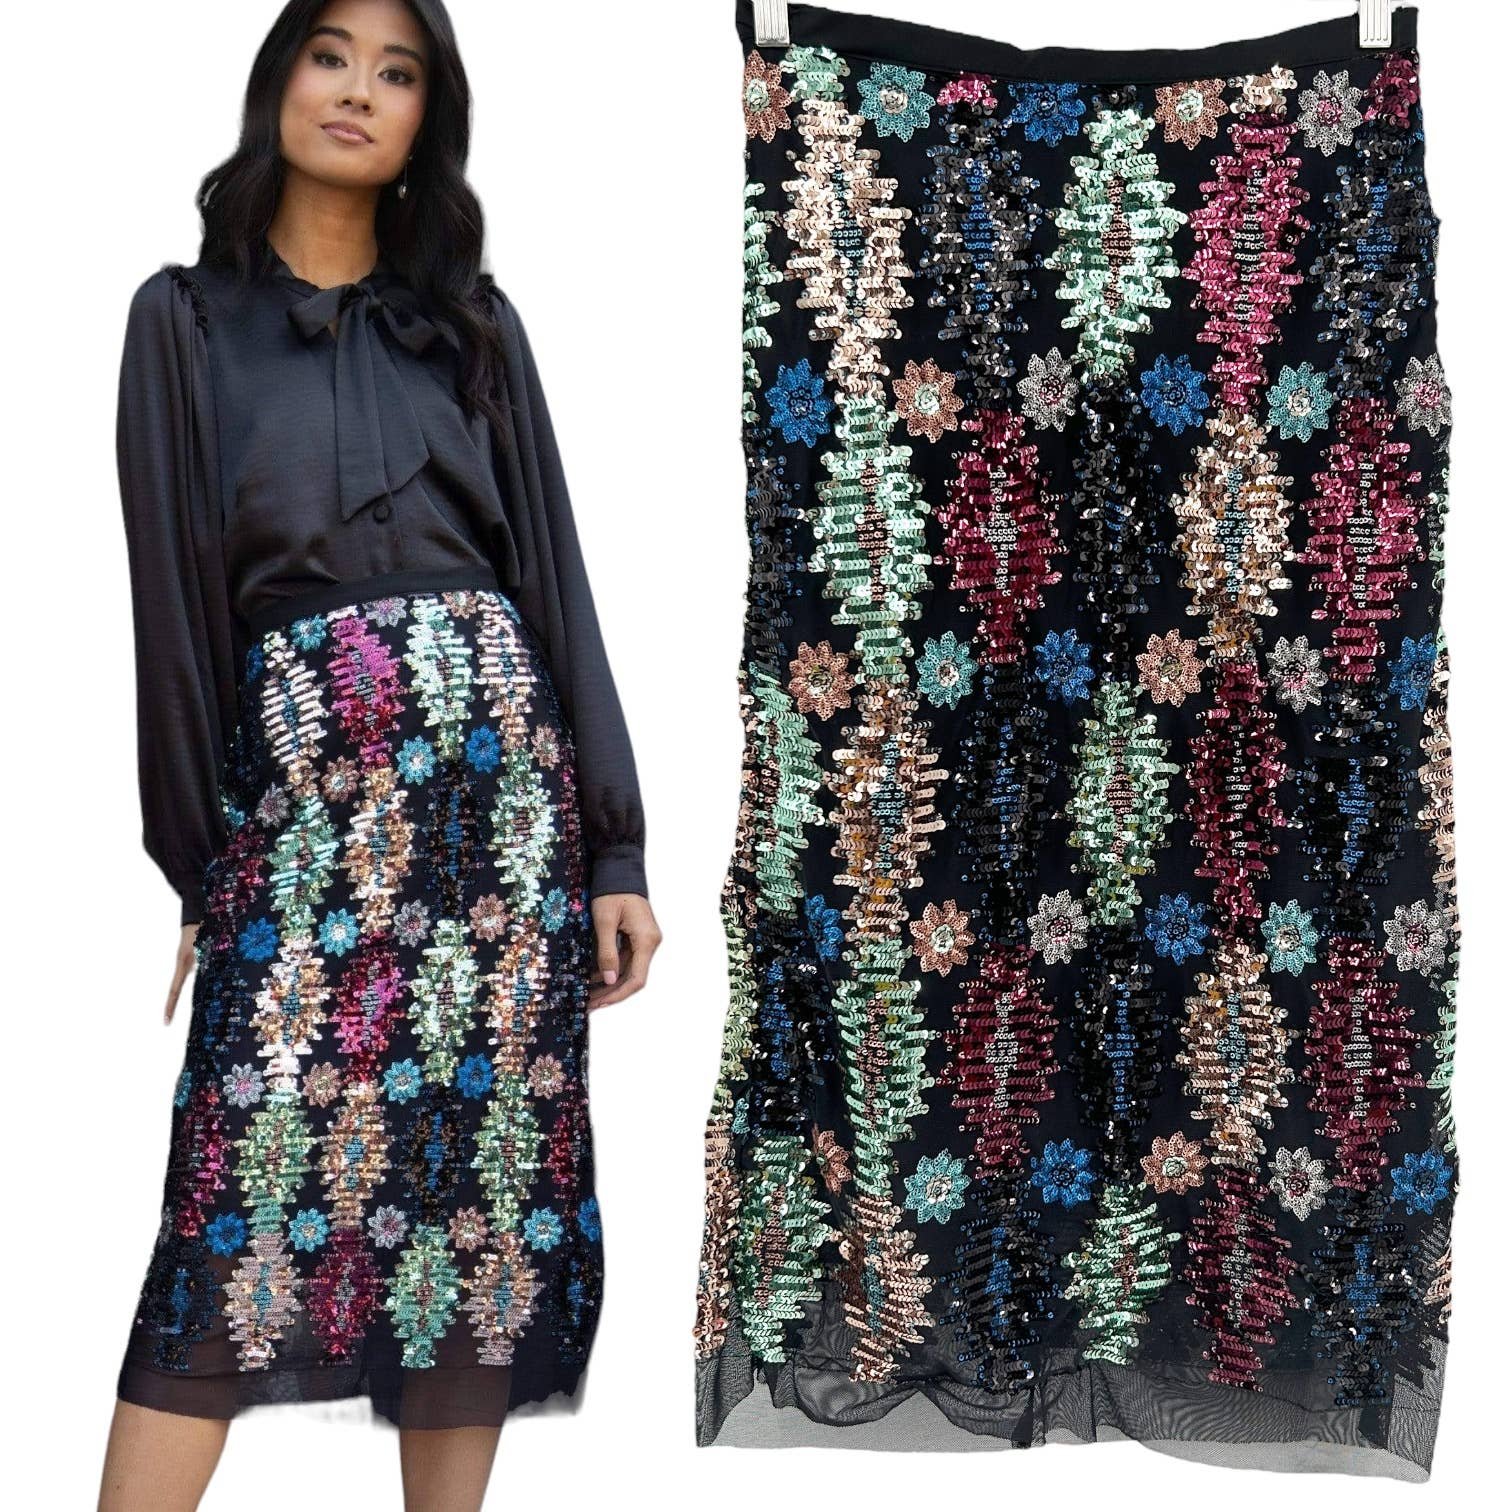 Stylish Eva Franco Anthropologie Womens Tribal Shine Sequin Midi Skirt Size 6 NWT Black P0G4mLWbk Online Shop